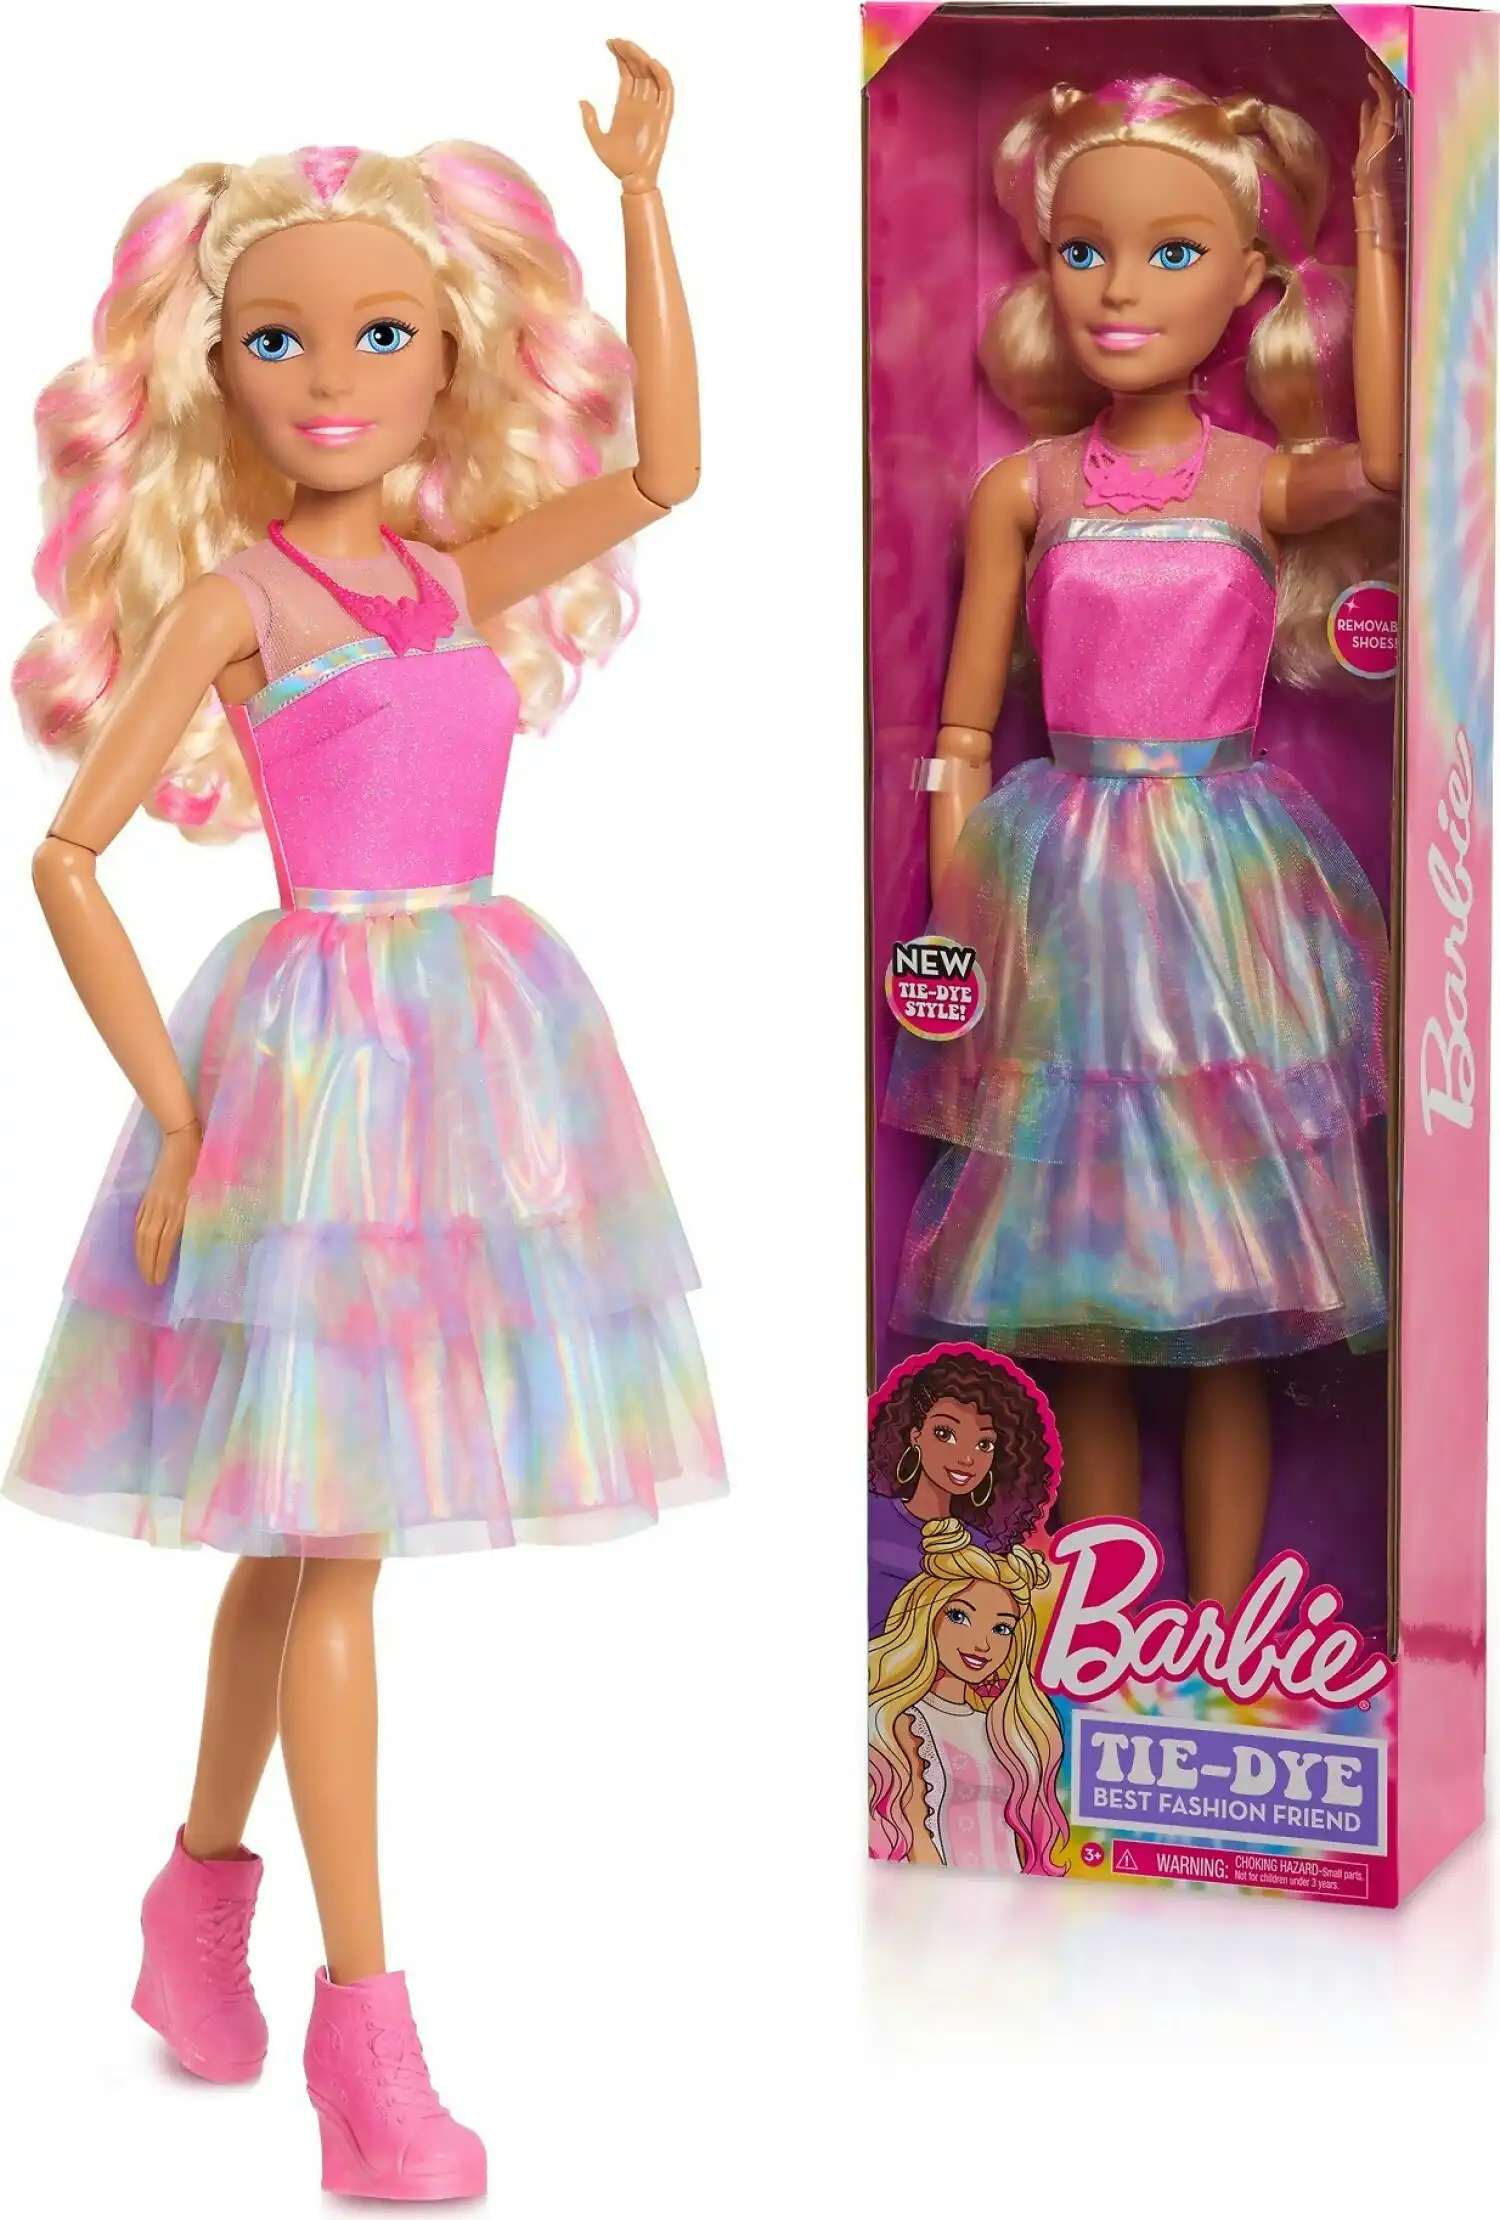 Barbie - Tye-dye Best Fashion Friend Blonde Fashion Barbie Doll Tall 28-inch (71cm) - Mattel